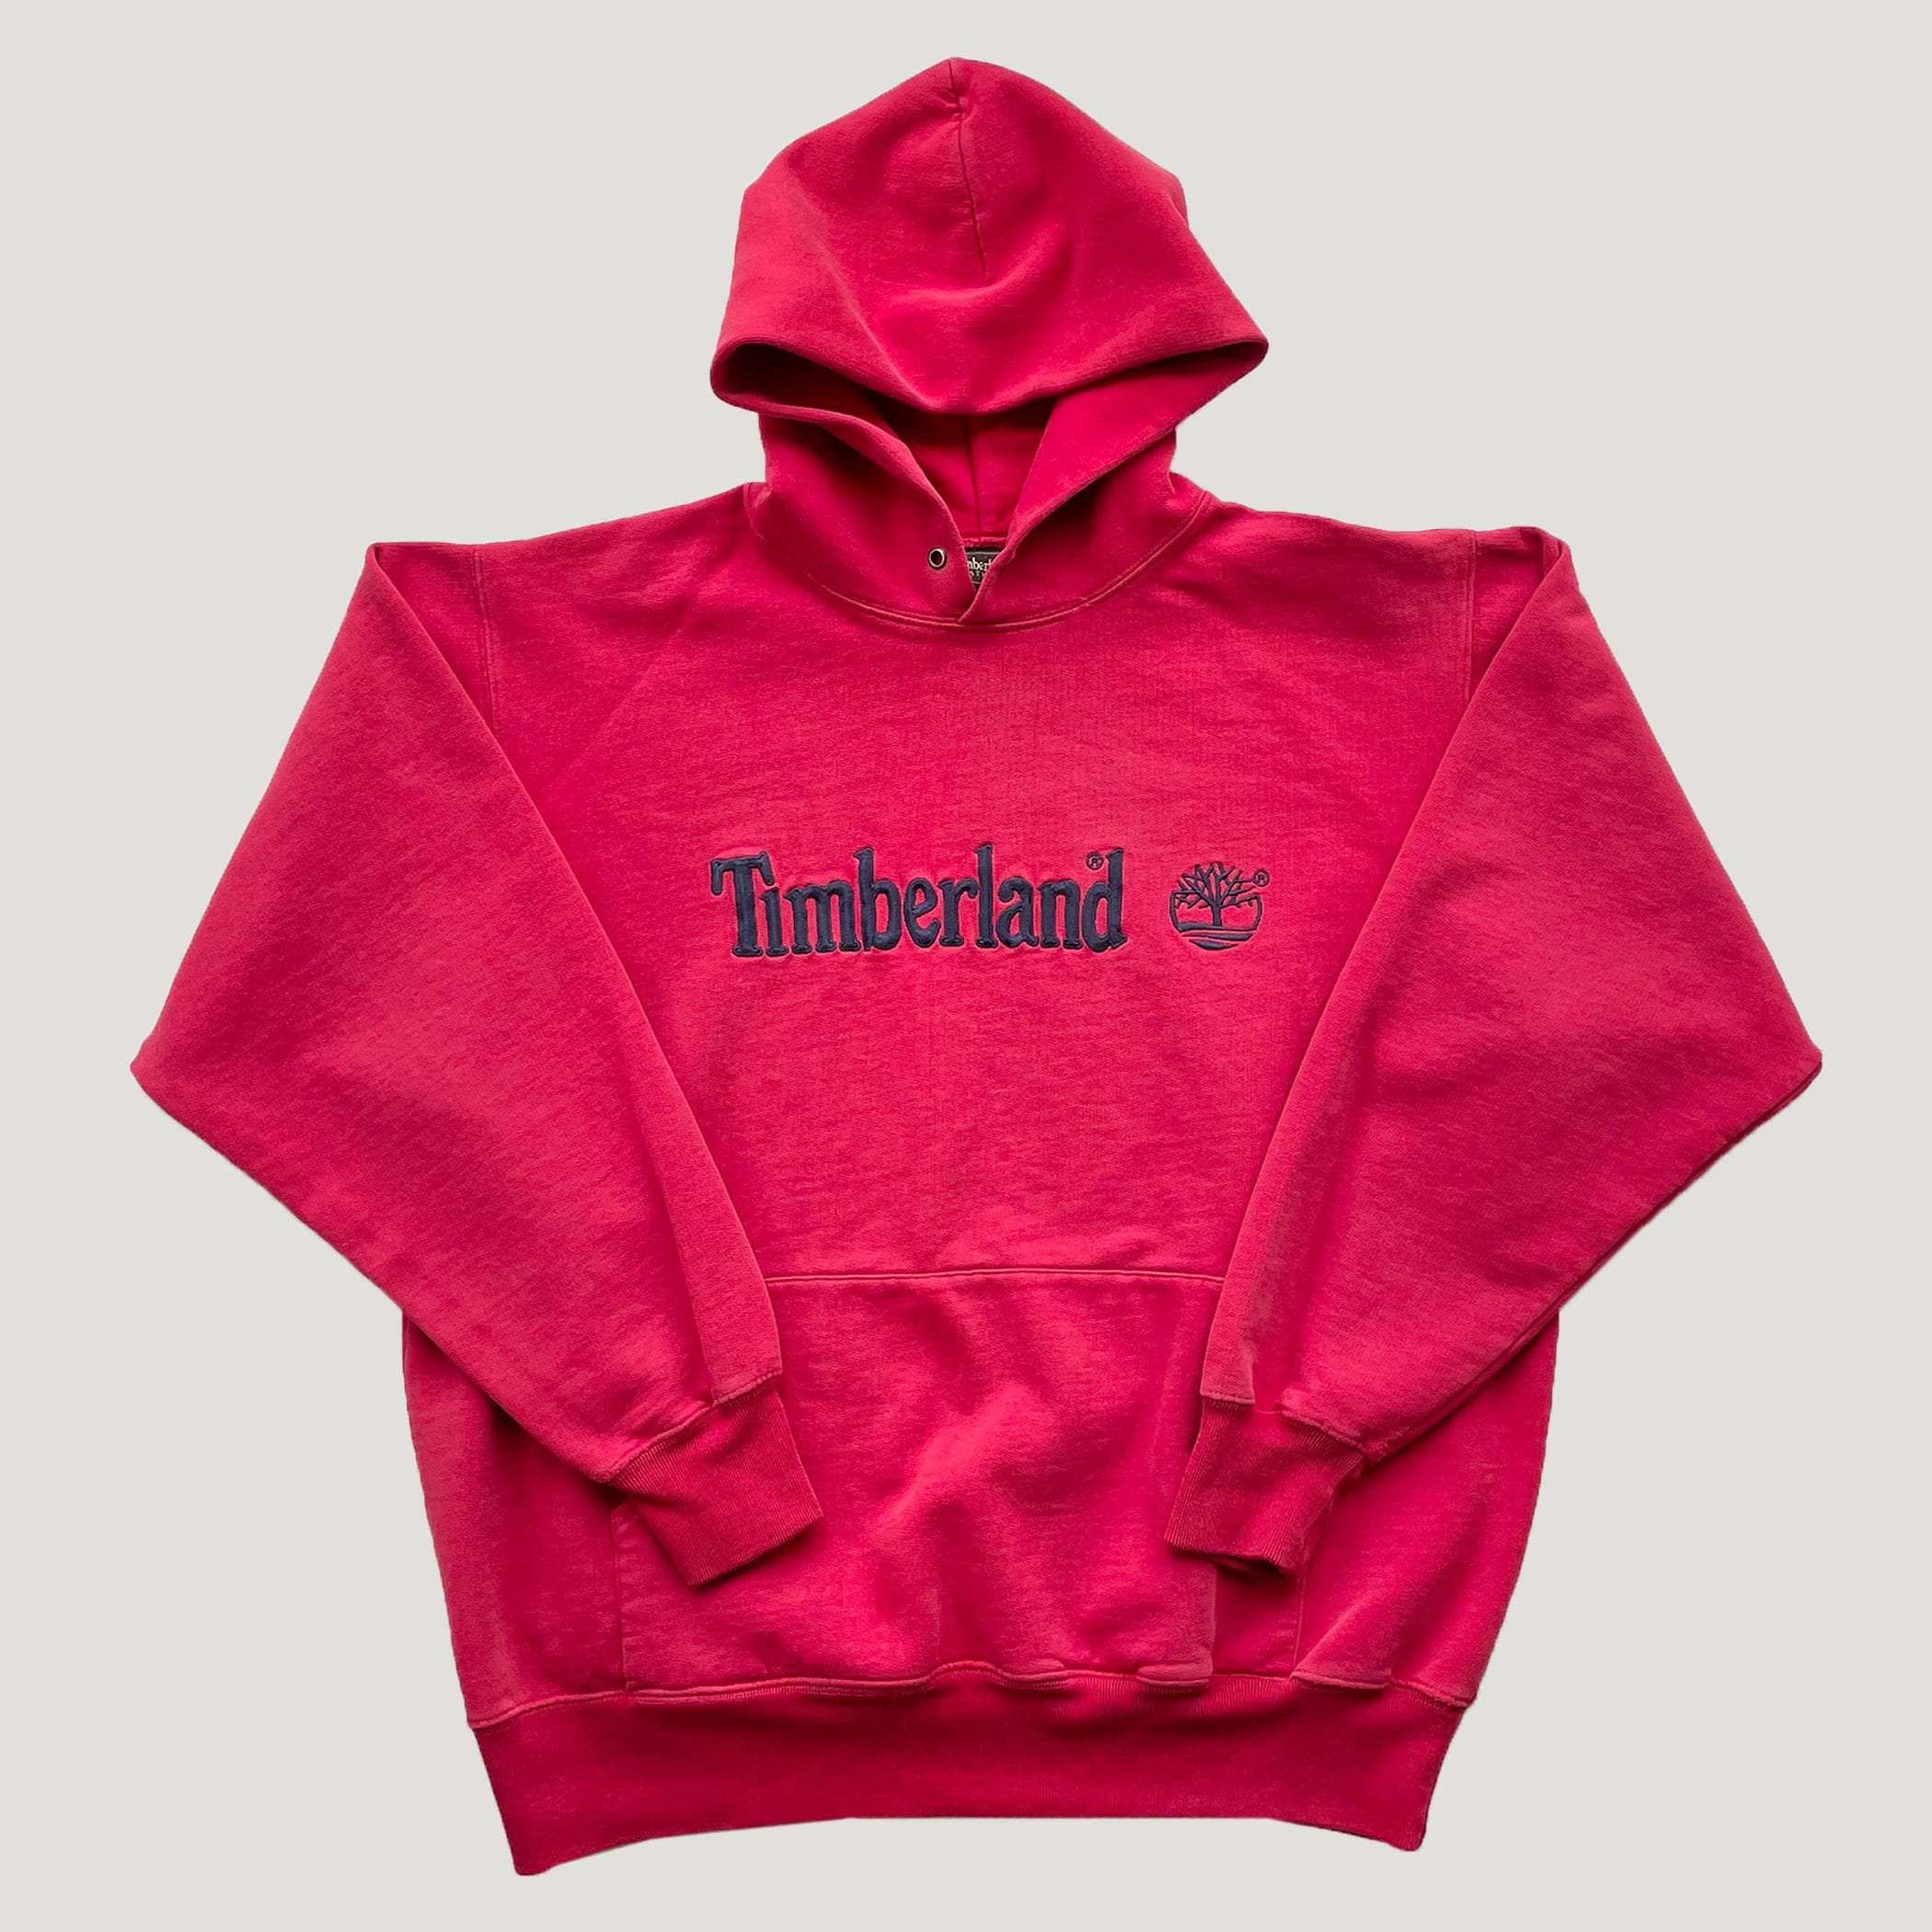 Timberland Men's Cursive Hoodie Sweatshirt